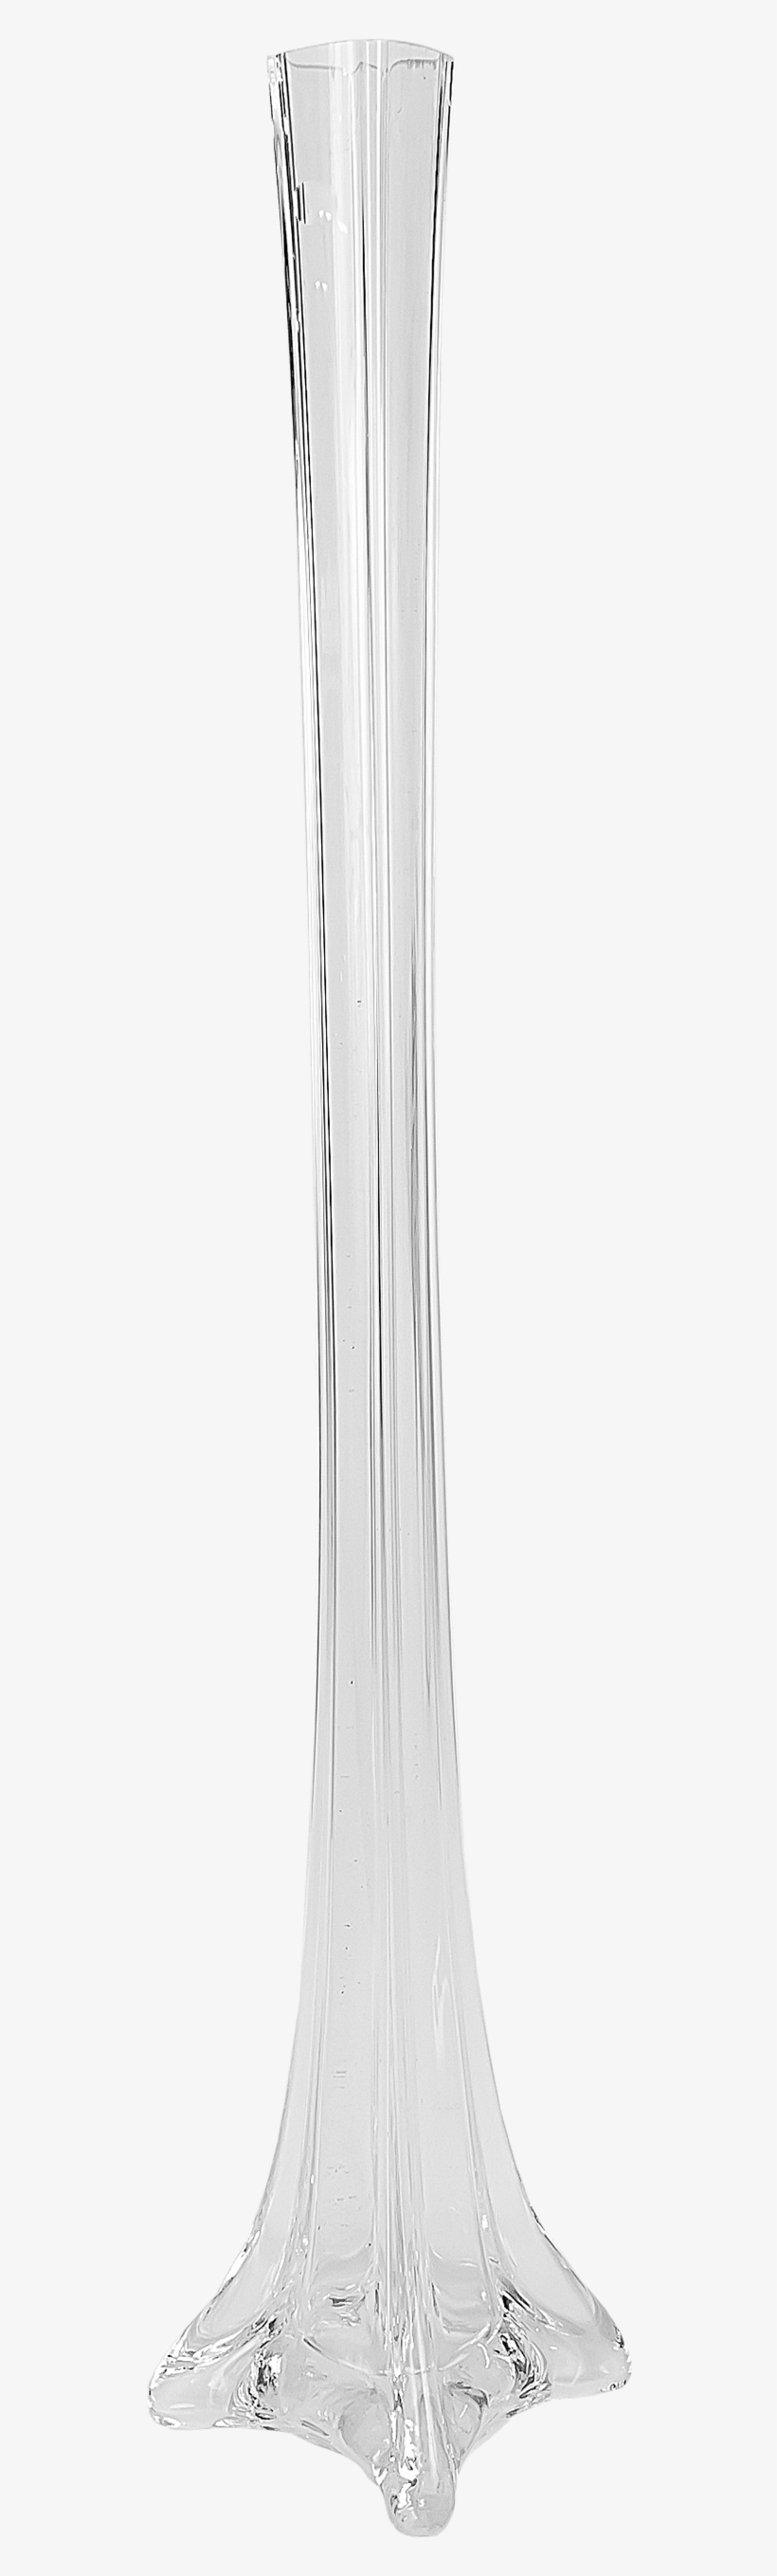 Eiffel Tower Vase - Apple Thunderbolt To Gigabit Ethernet Adapter, transparent png #723670